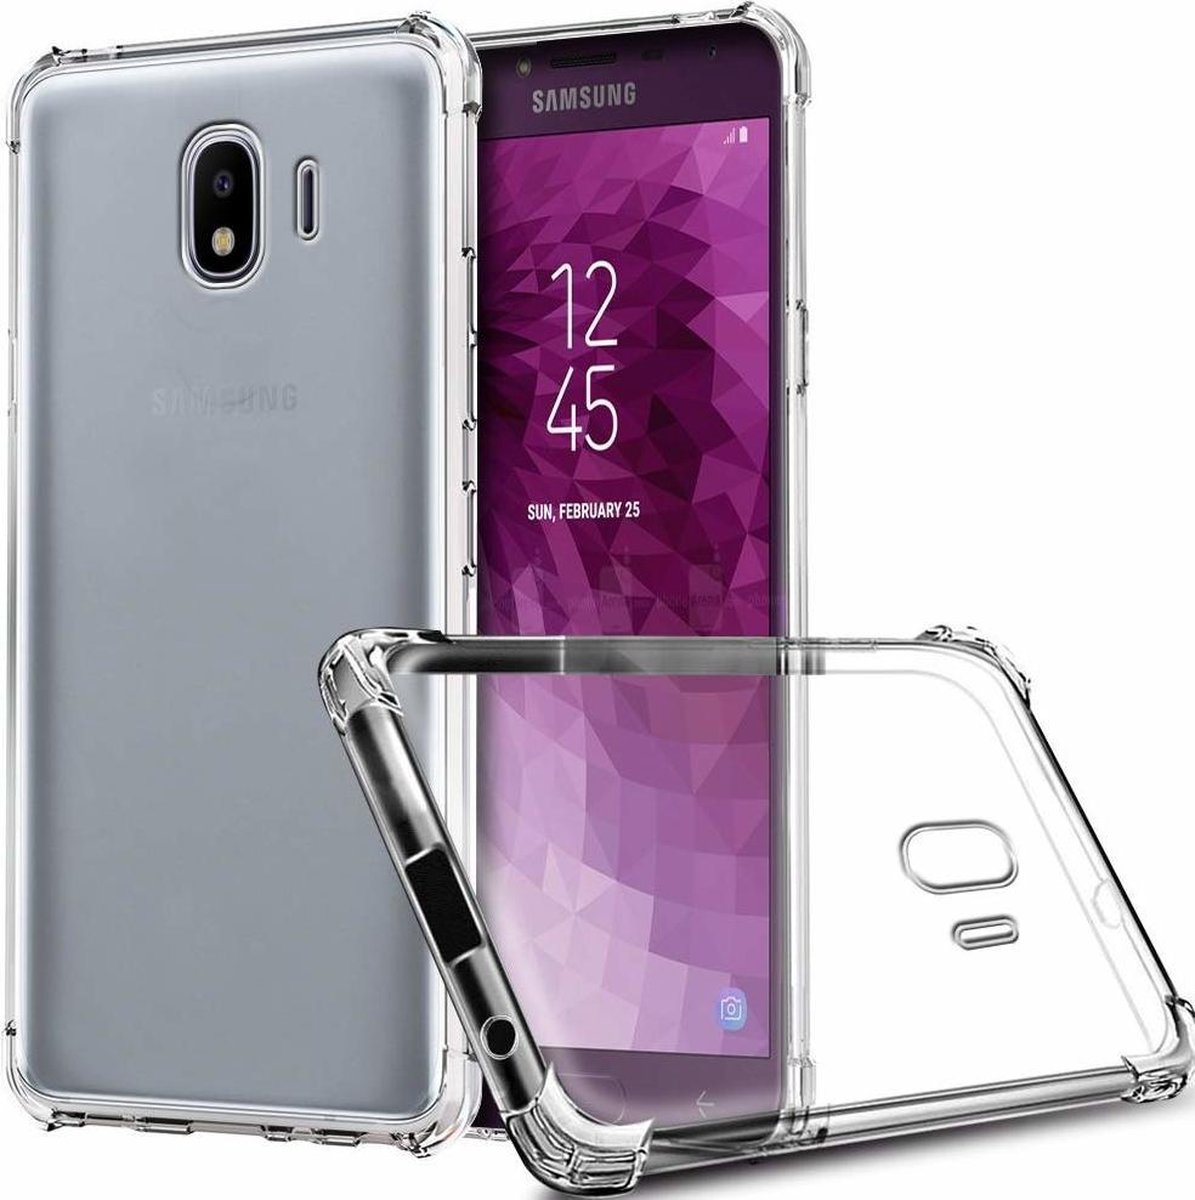 Hoesje geschikt voor Samsung Galaxy J4 - anti-shock tpu back cover - transparant